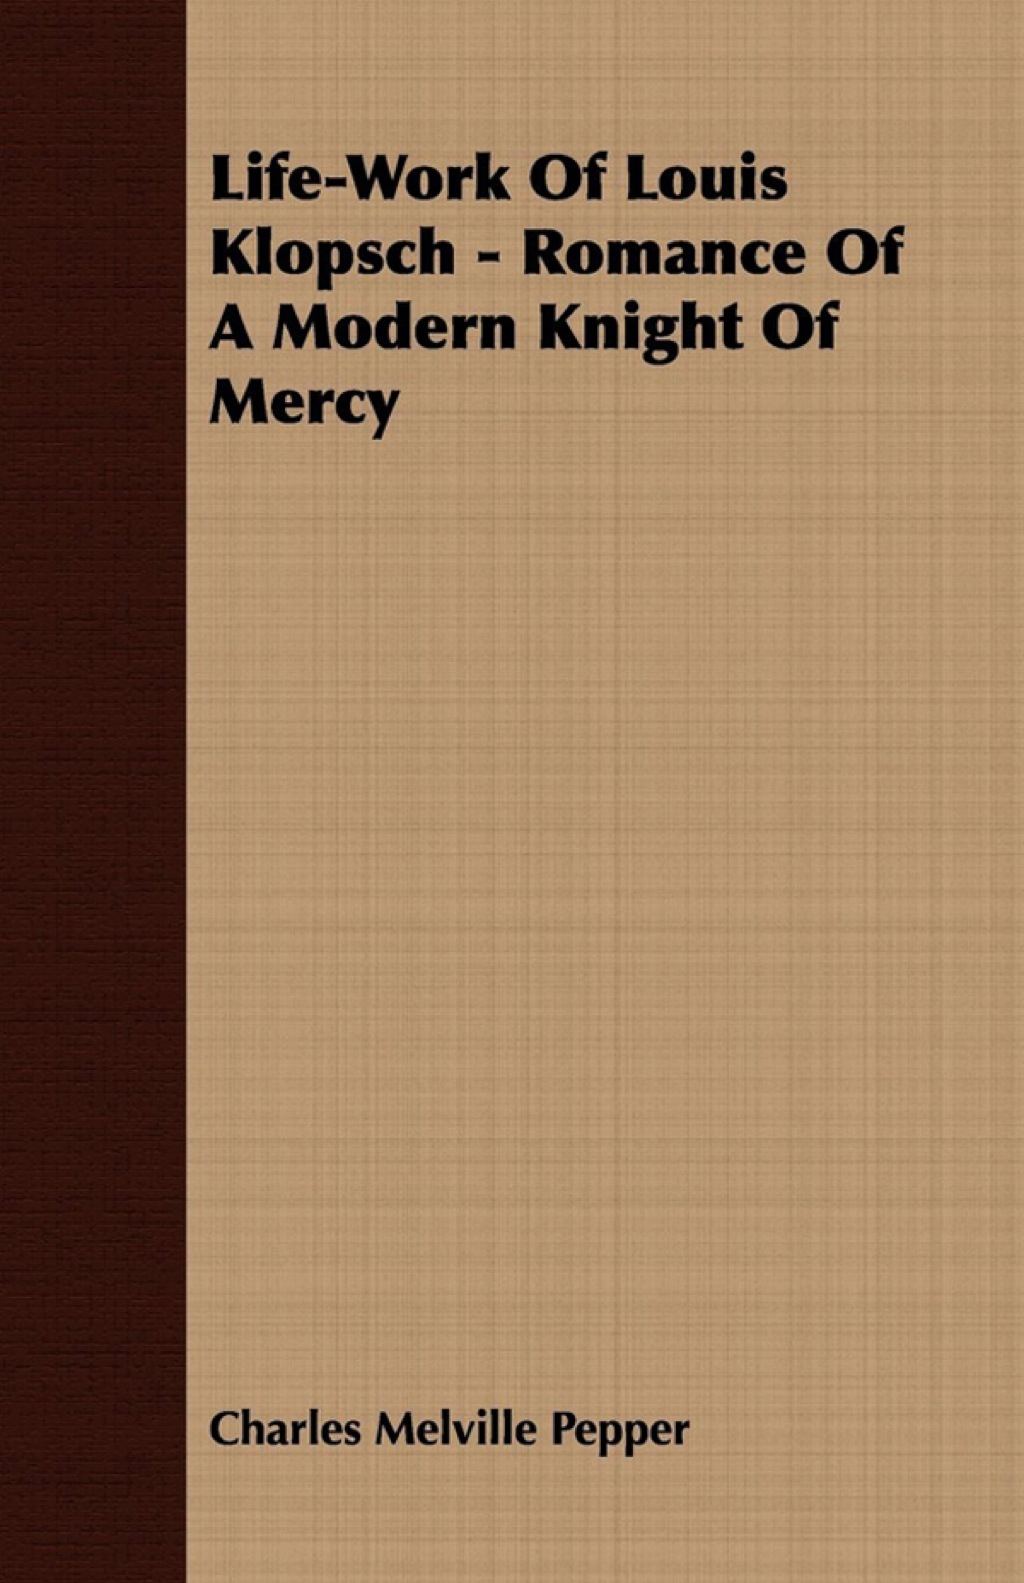 Life-Work Of Louis Klopsch - Romance Of A Modern Knight Of Mercy (eBook) - Charles Melville Pepper,